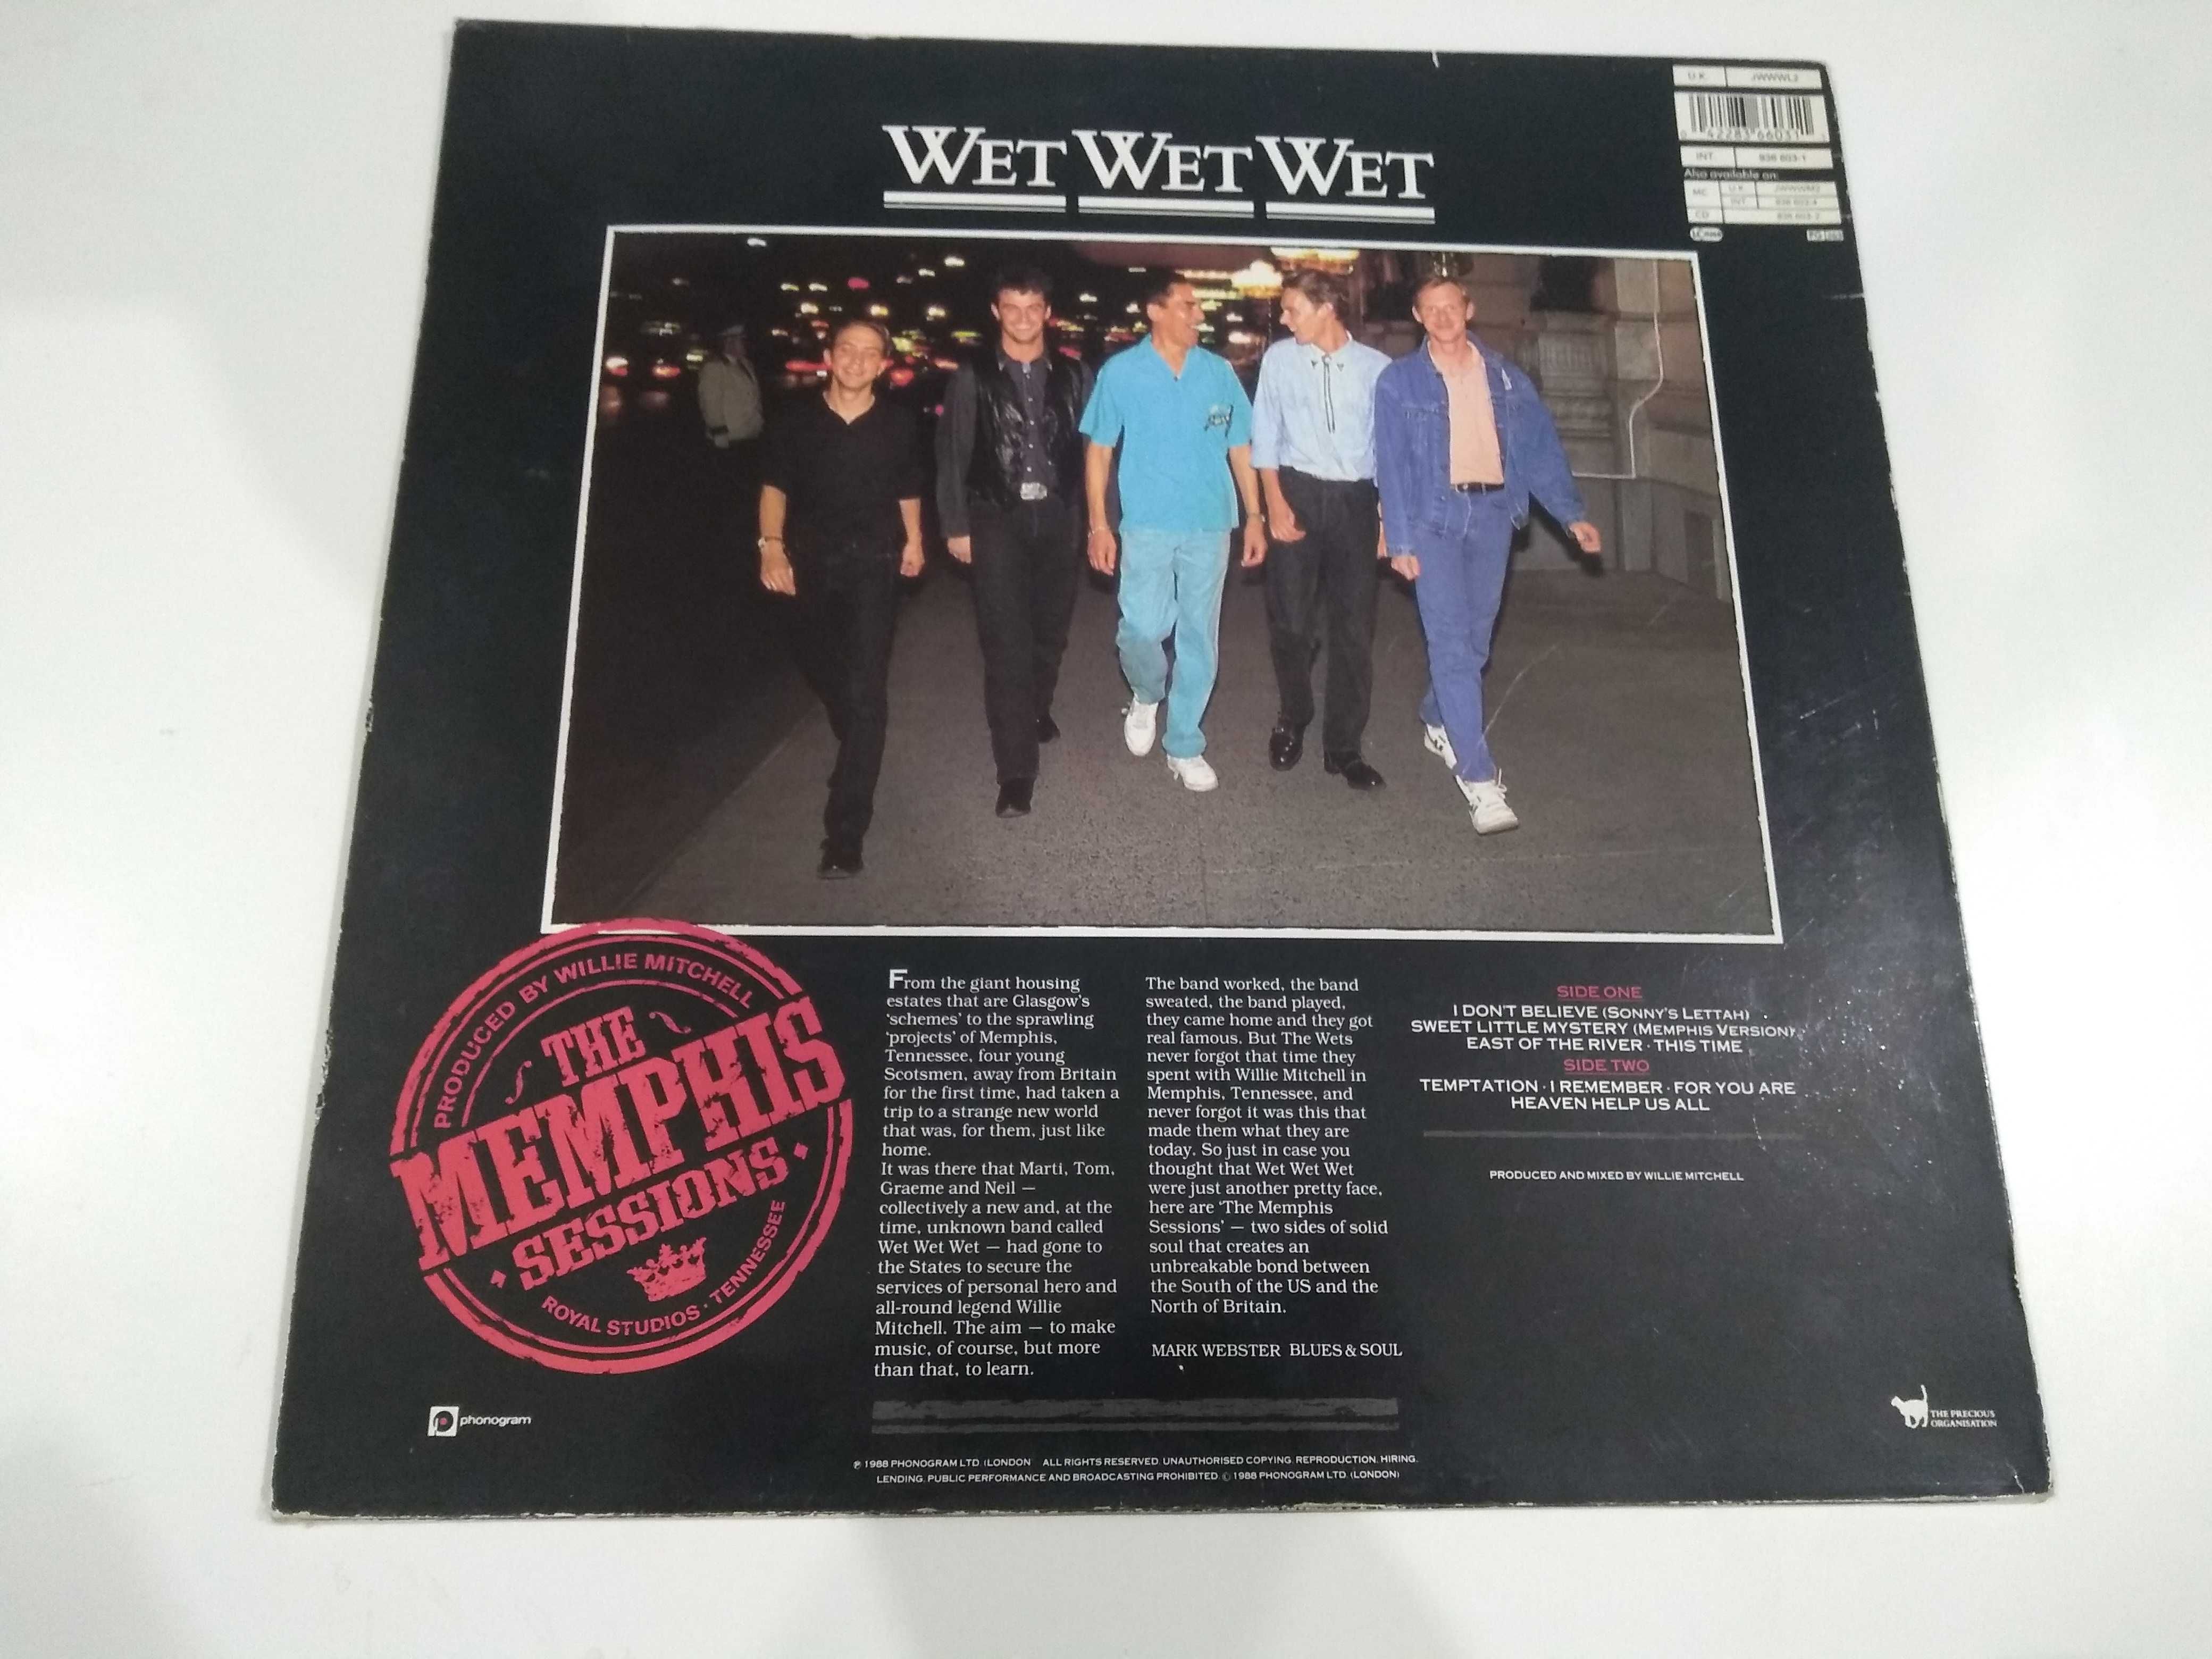 Dobra płyta - Wet Wet Wet The Memphis sessions